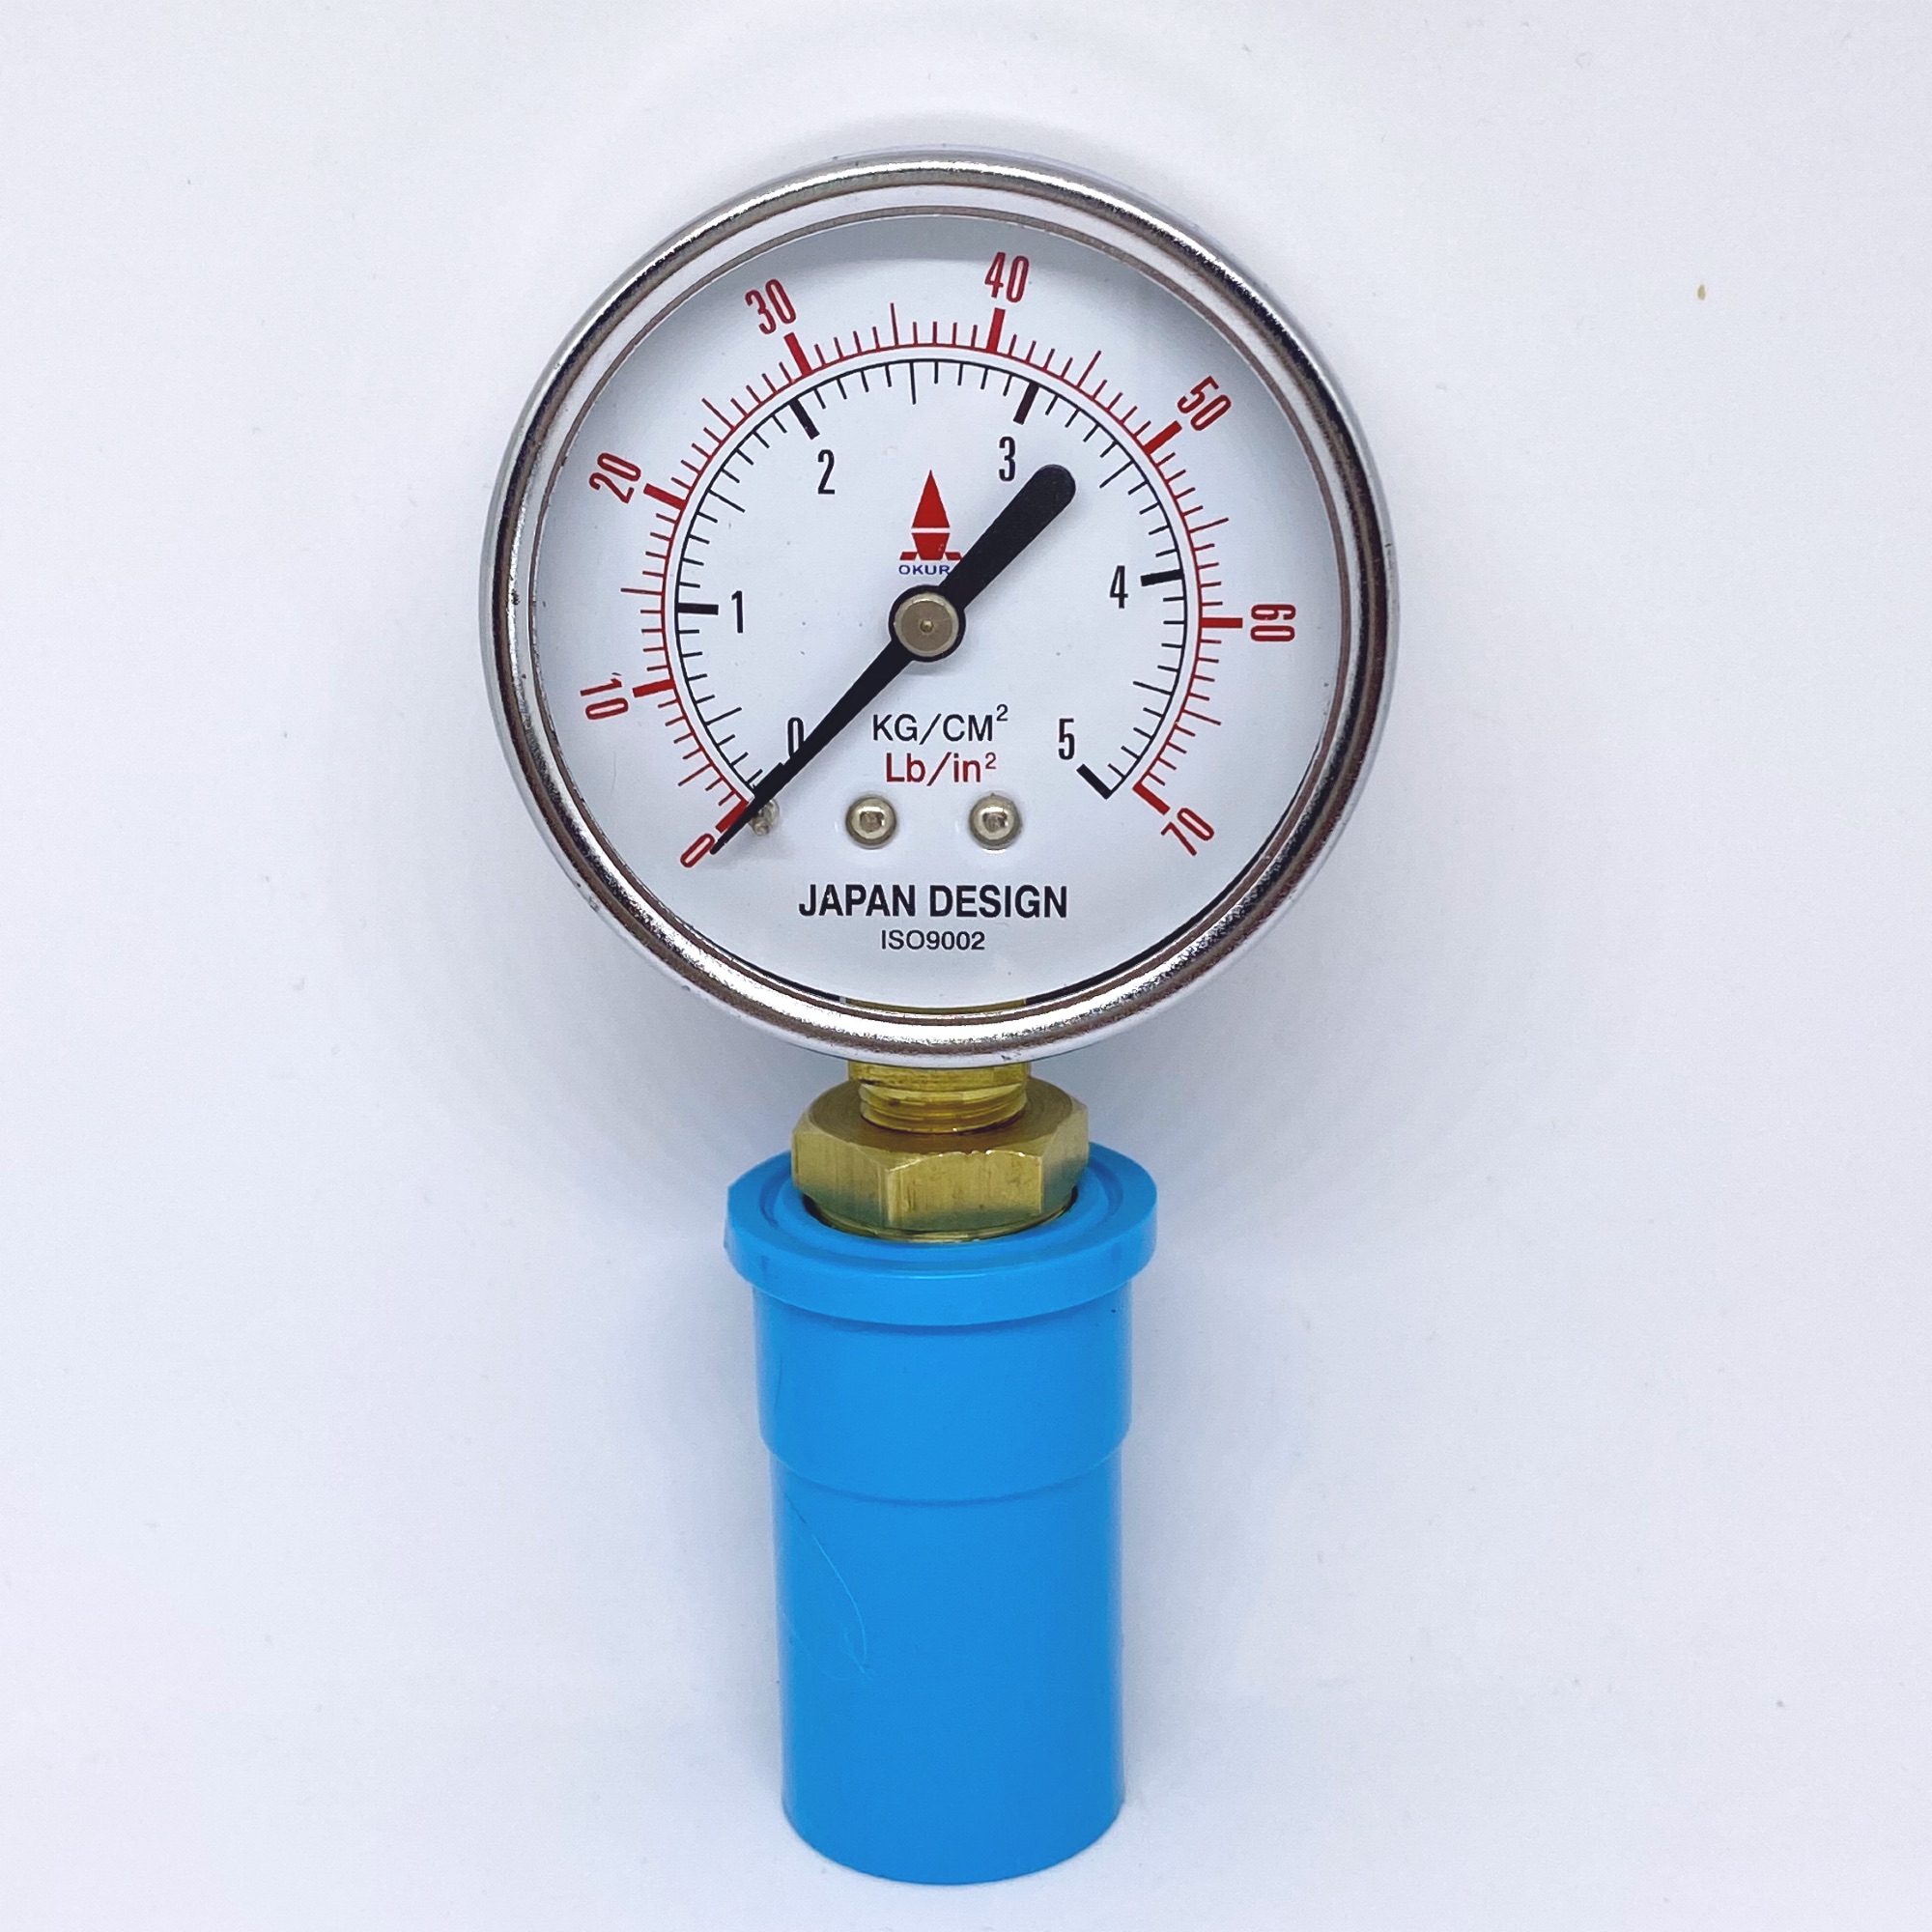 Pressure gauge 5 kg/cm2 สำหรับต่อกับท่อประปาขนาด 1/2